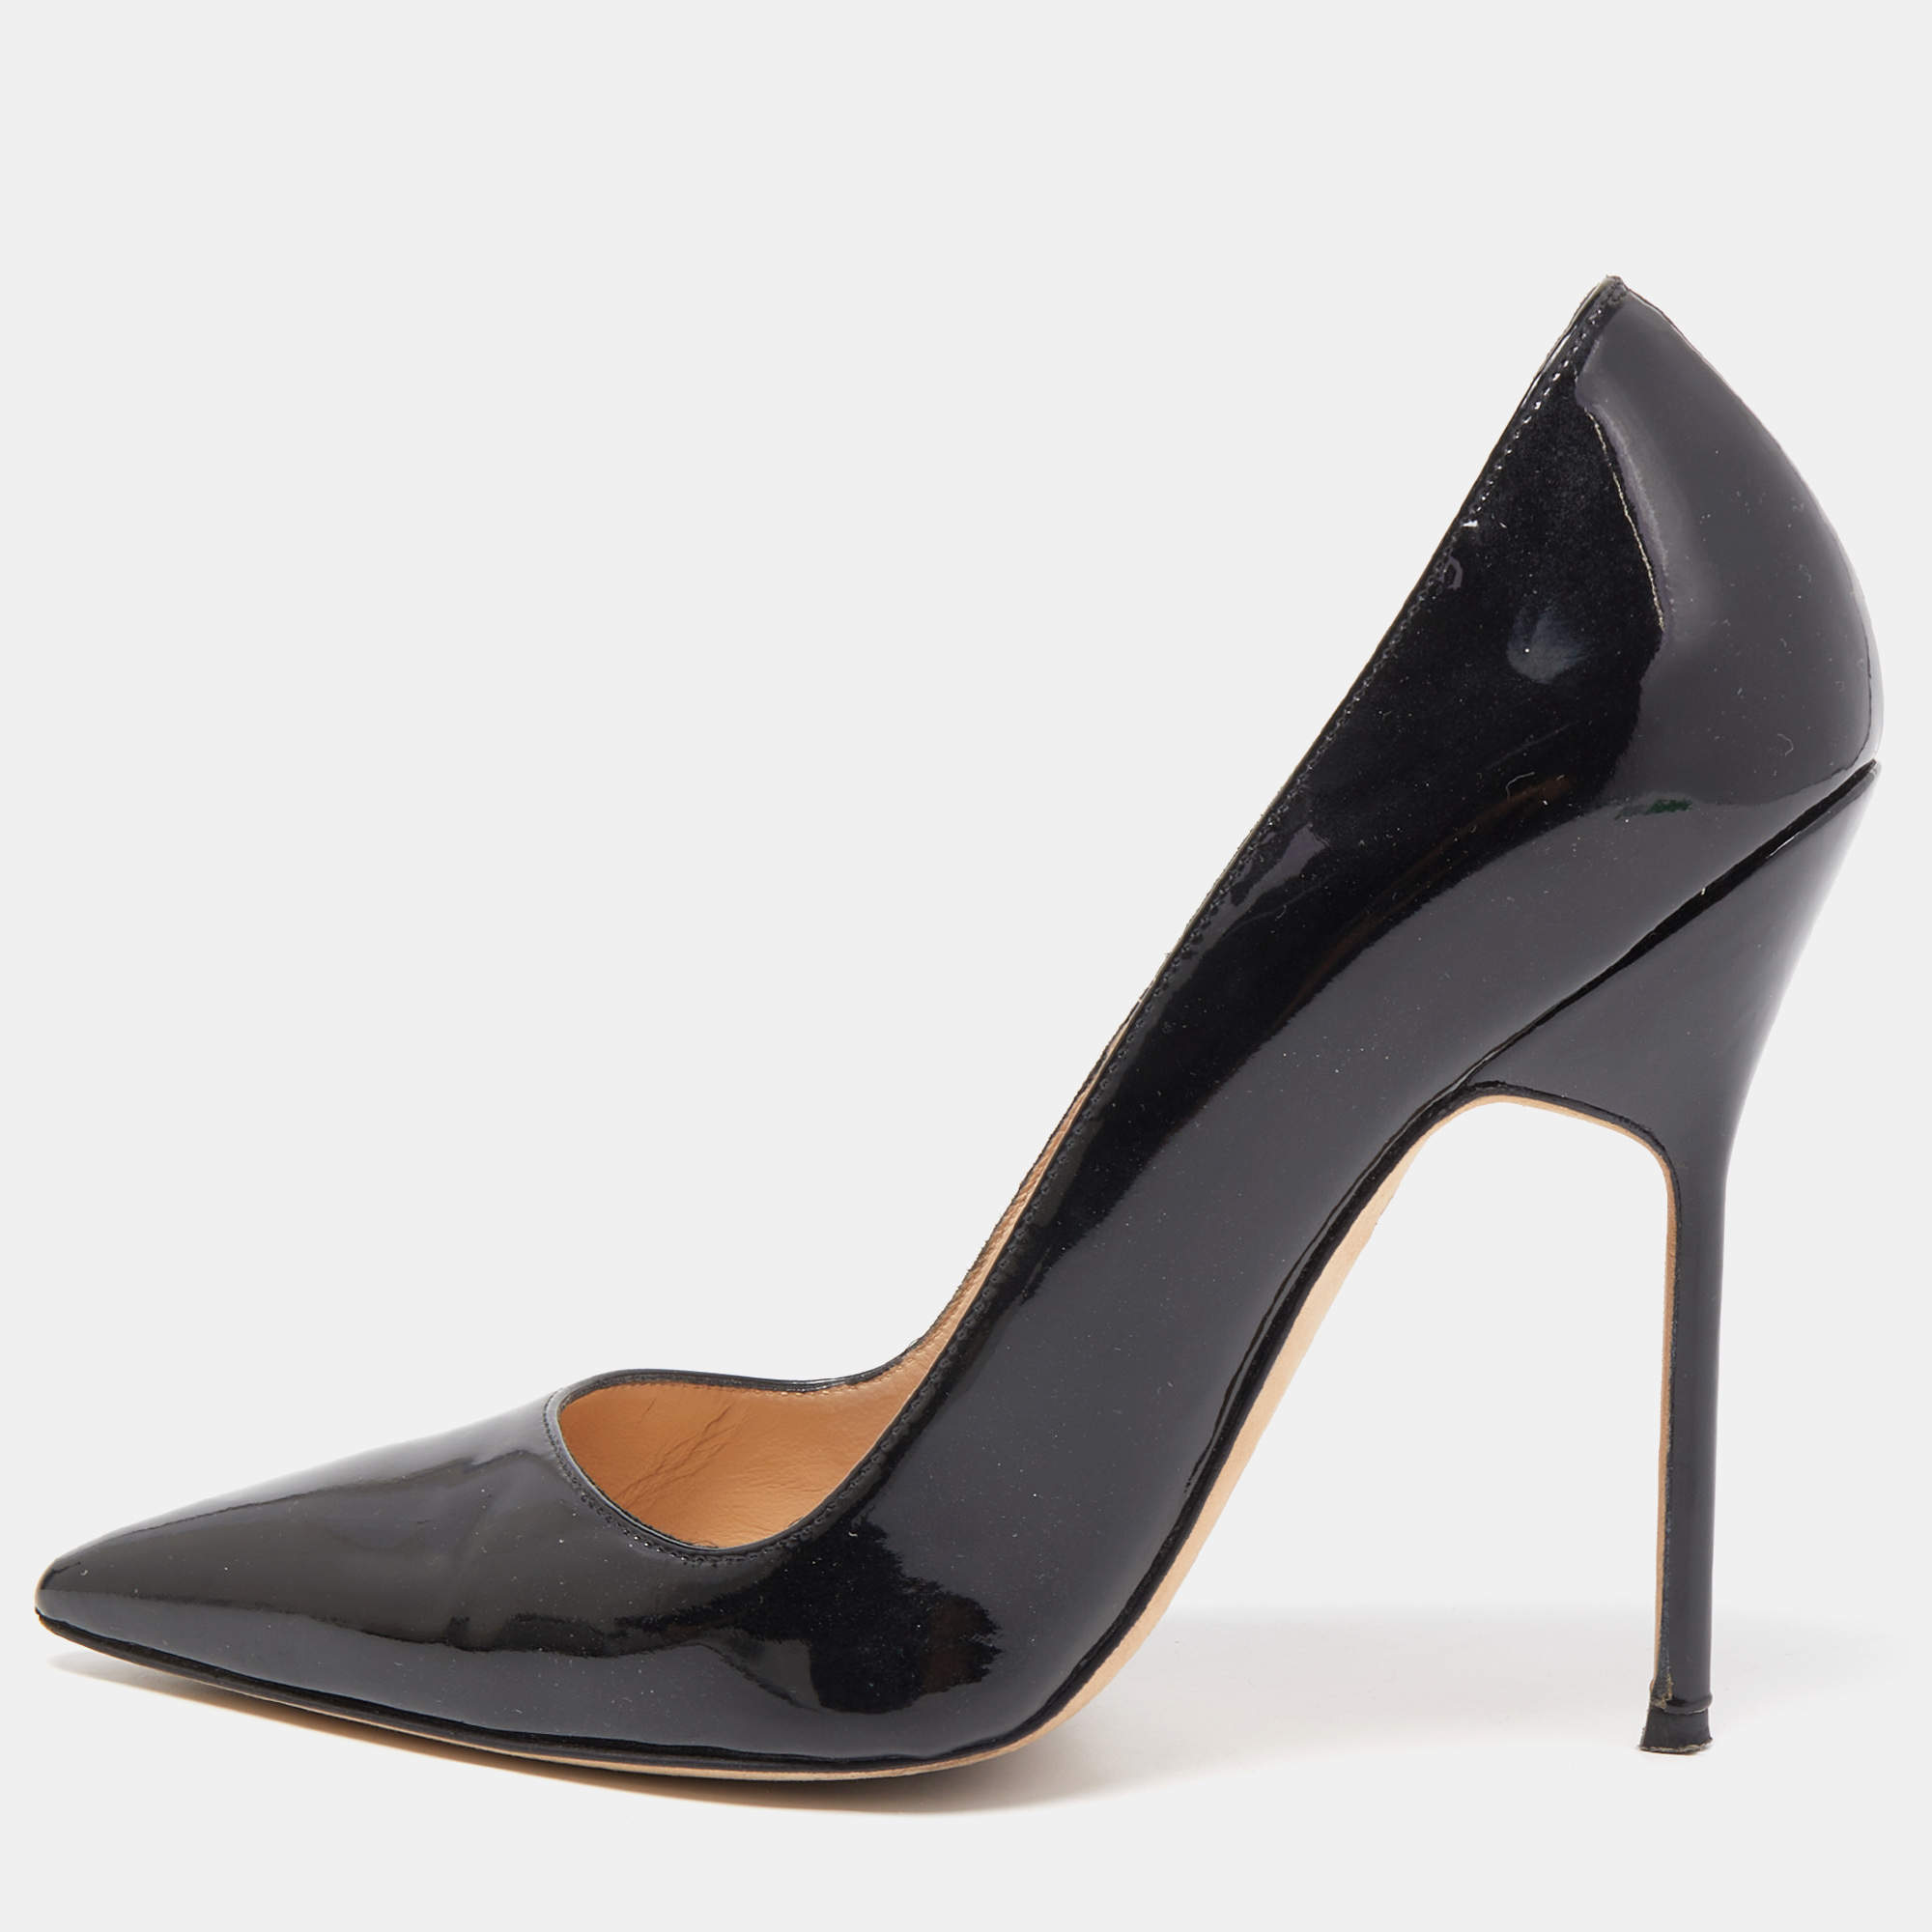 NIB $725 Manolo Blahnik BB 90 Pumps Shoes Heels Patent Leather Black sz 37 7